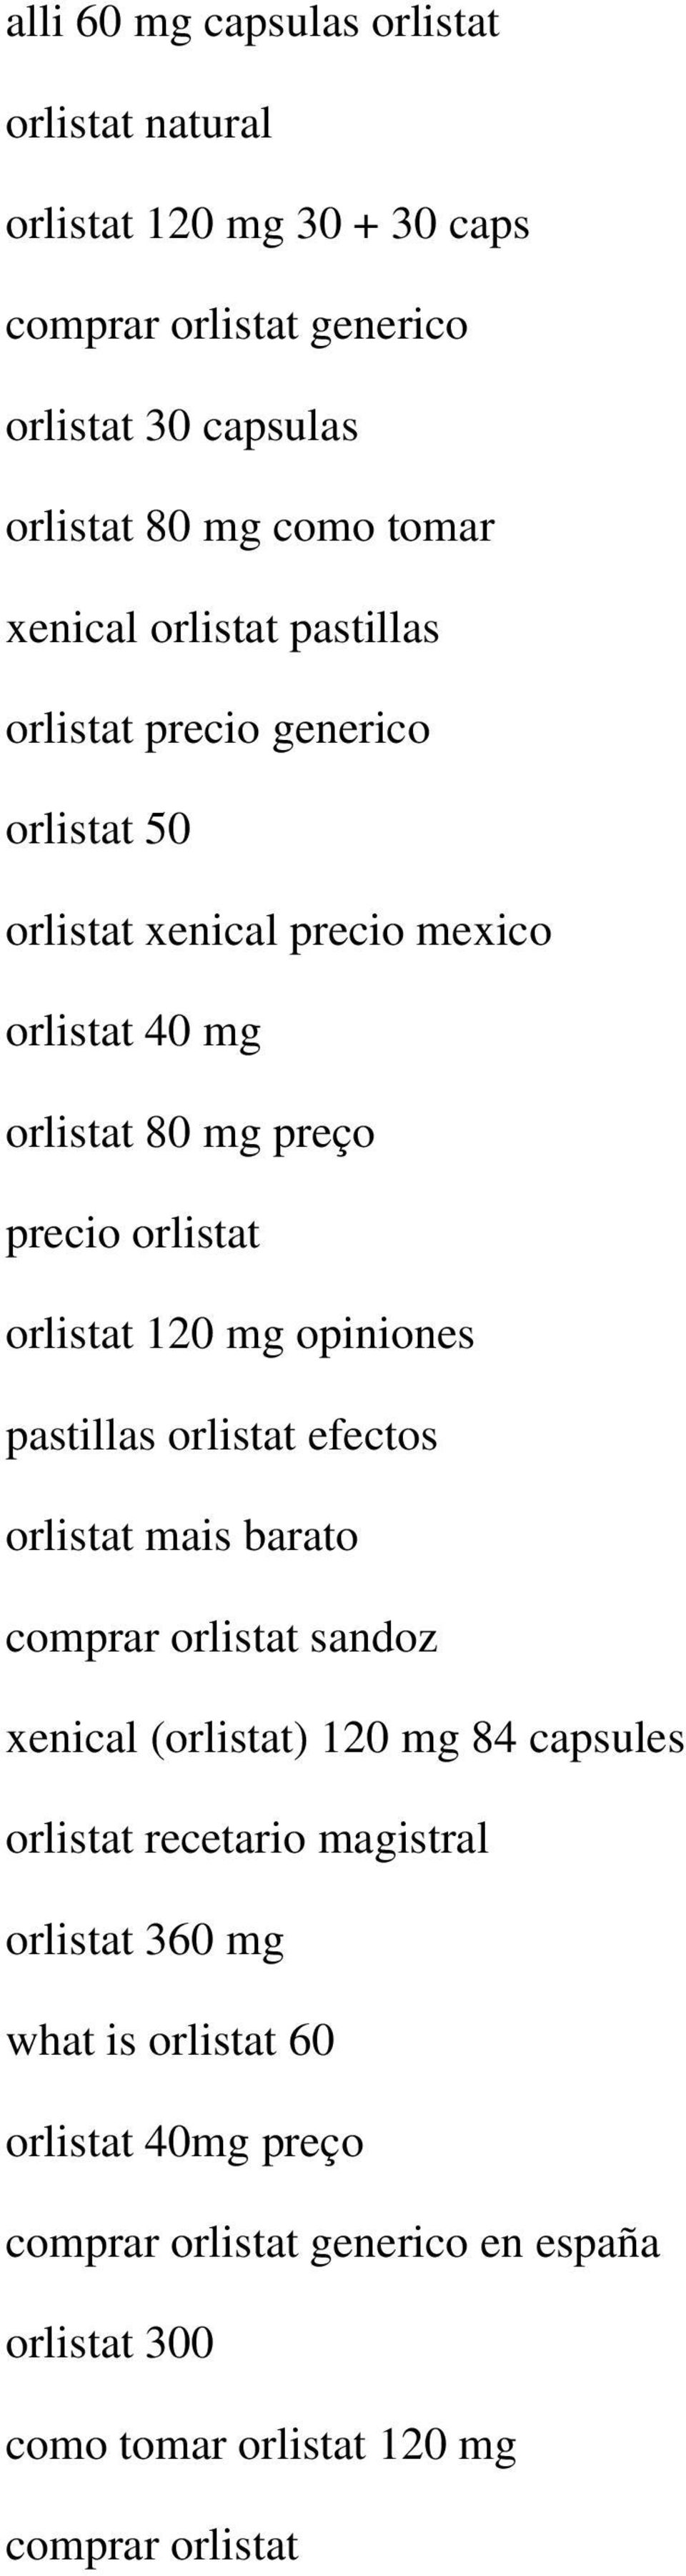 orlistat 120 mg opiniones pastillas orlistat efectos orlistat mais barato comprar orlistat sandoz xenical (orlistat) 120 mg 84 capsules orlistat